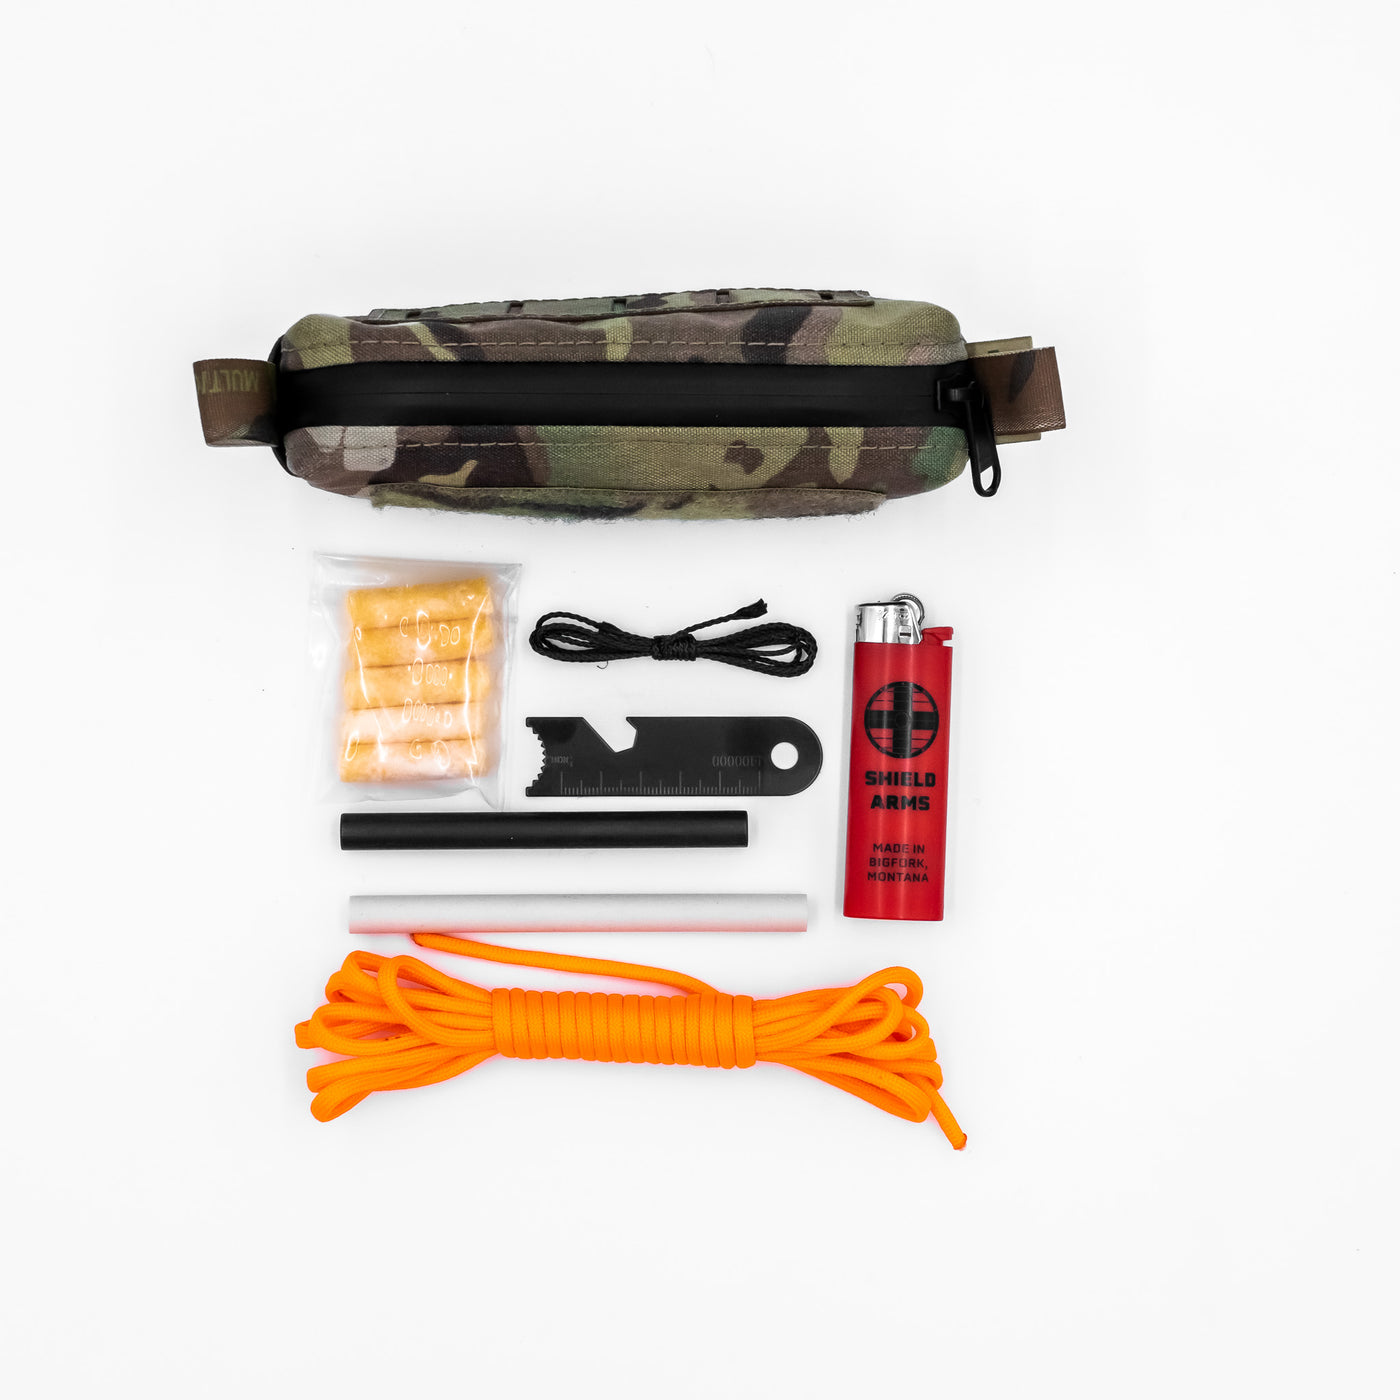 Fire Kit by Mountain Partisan